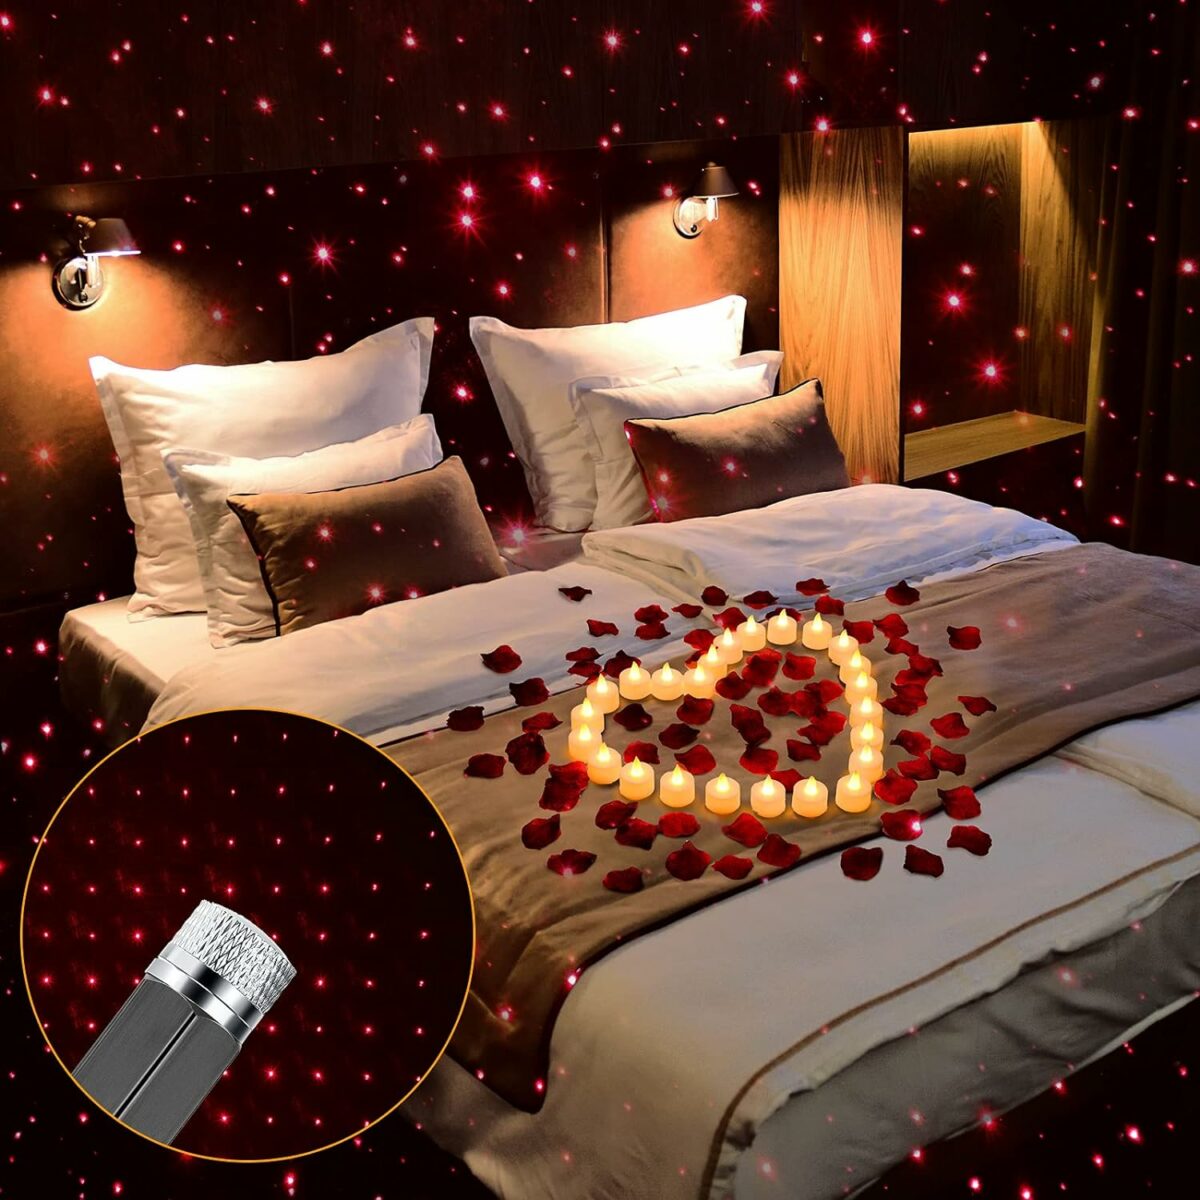 Couples Romantic Bedroom Ideas: Inspiring One's